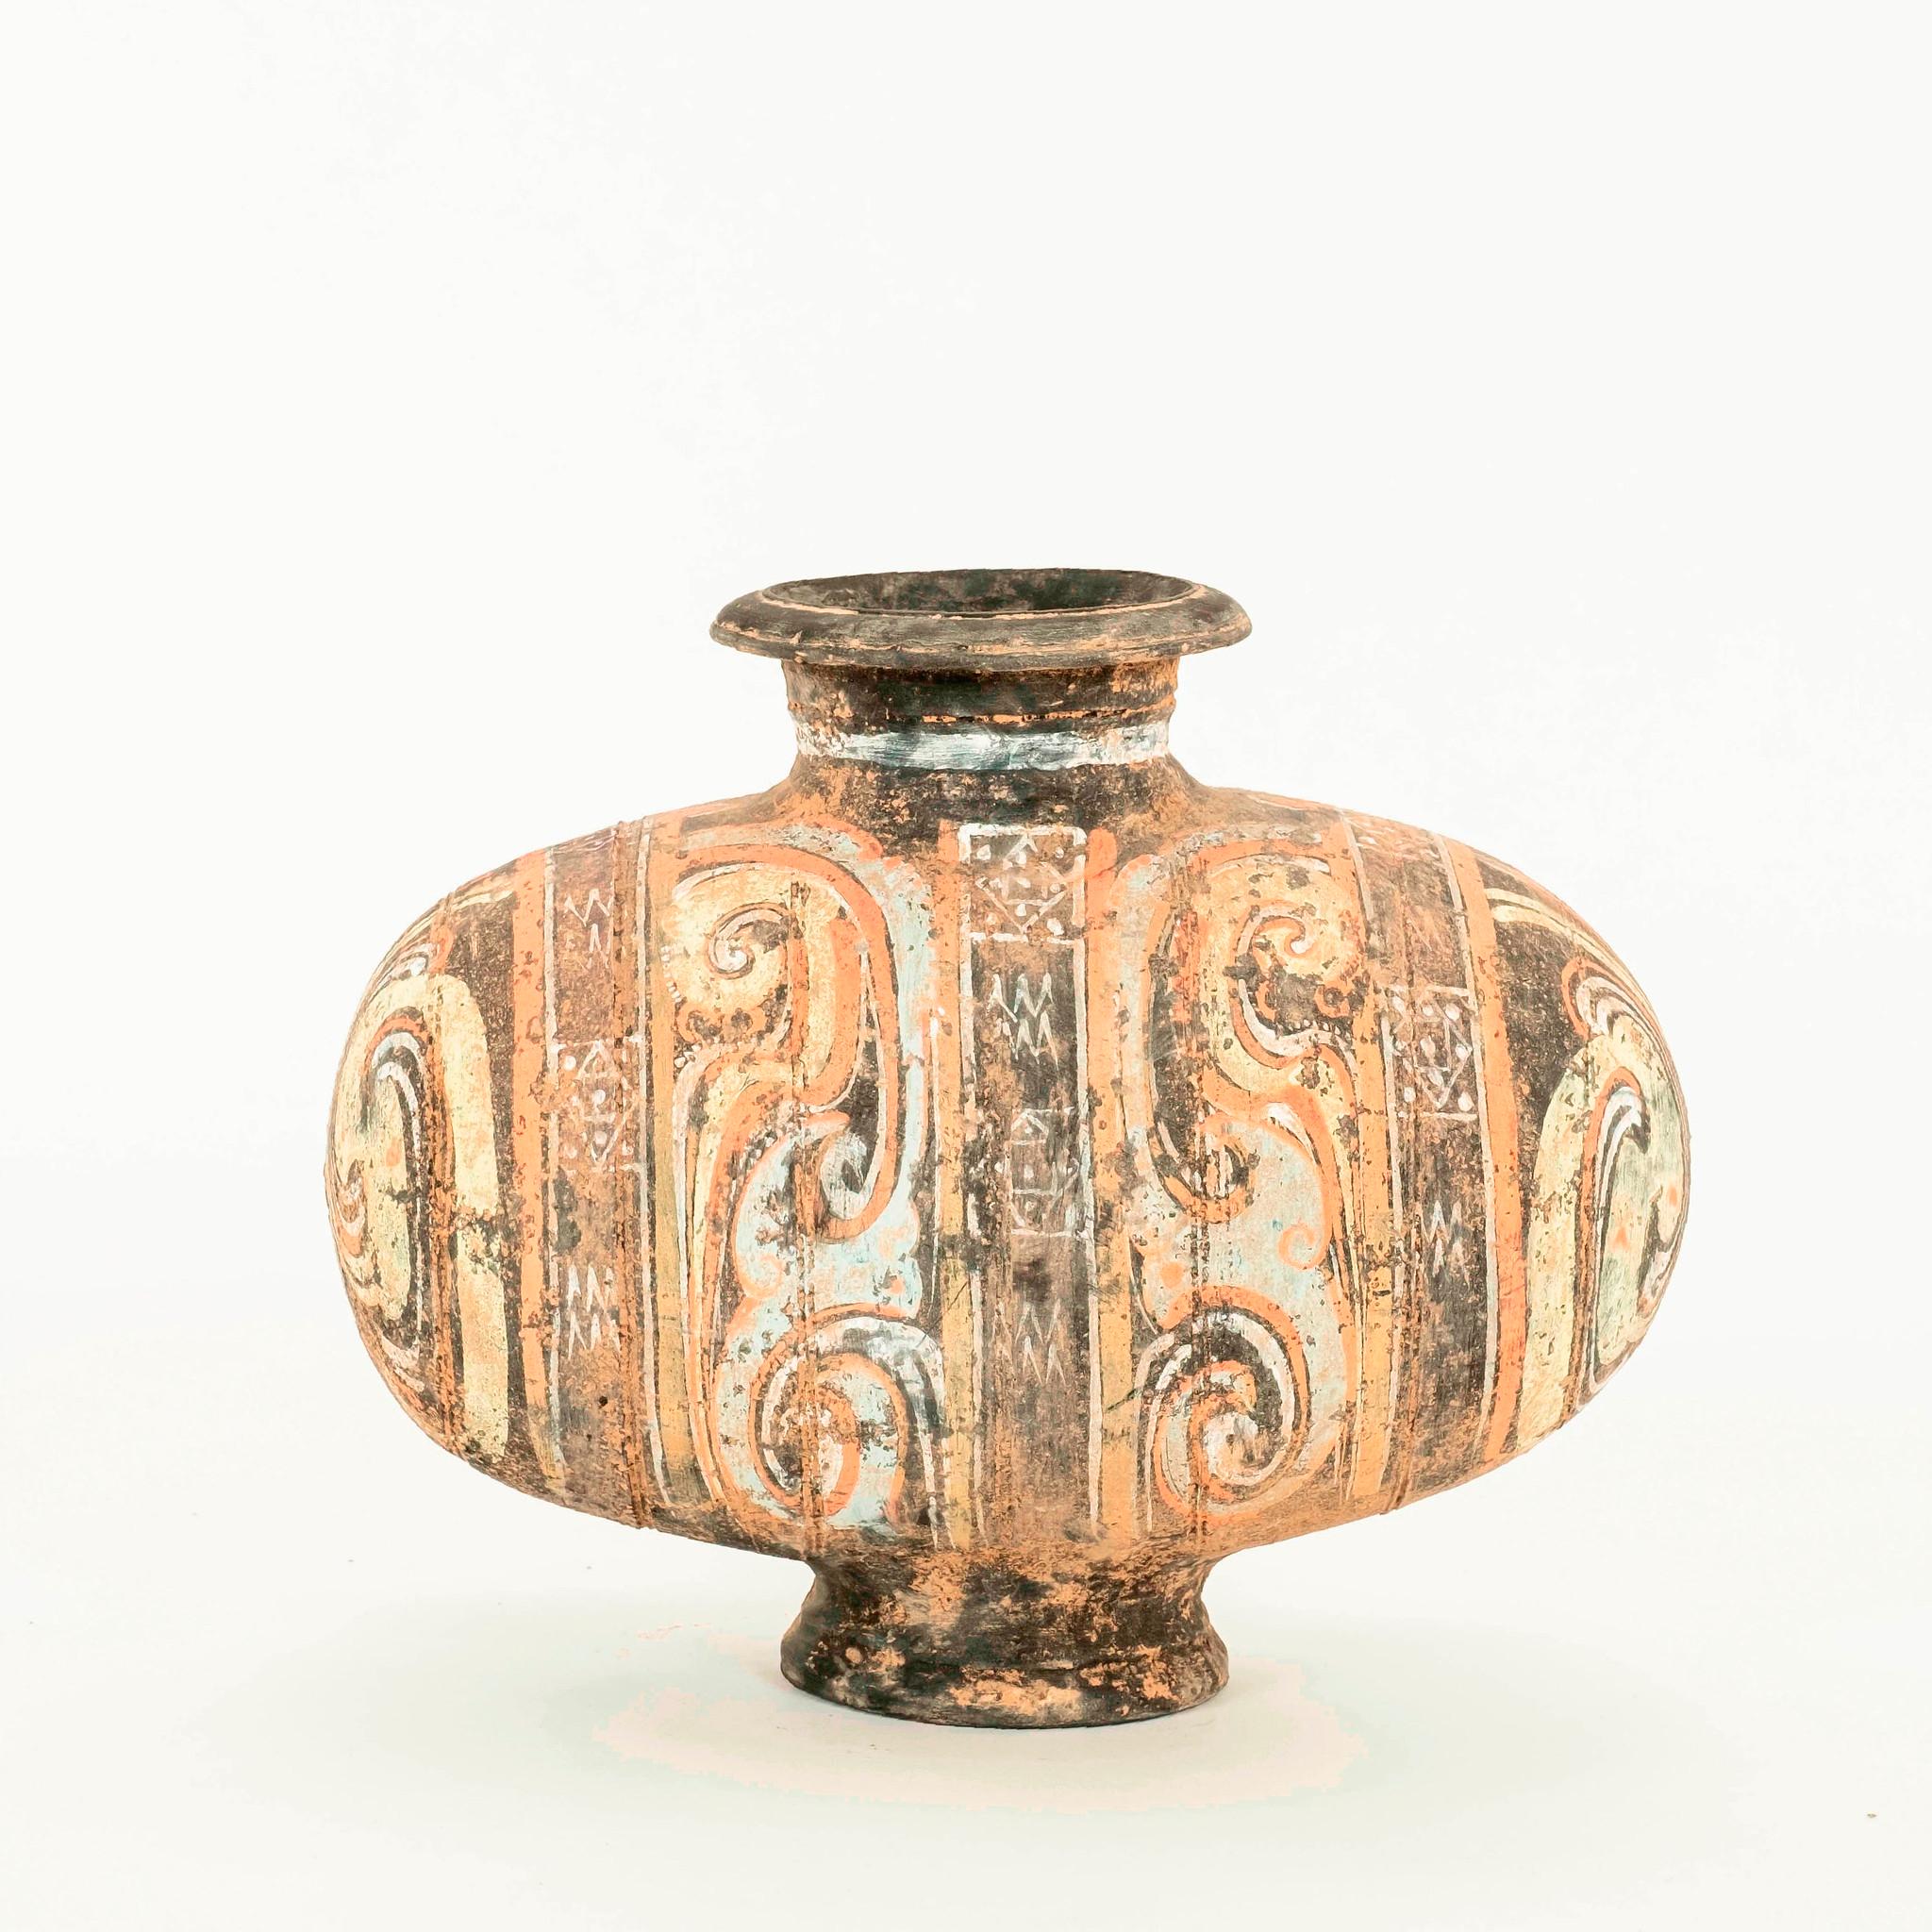 Chinese Han Dynasty Earthware Cocoon Jar Circa 206 BC-220 AD